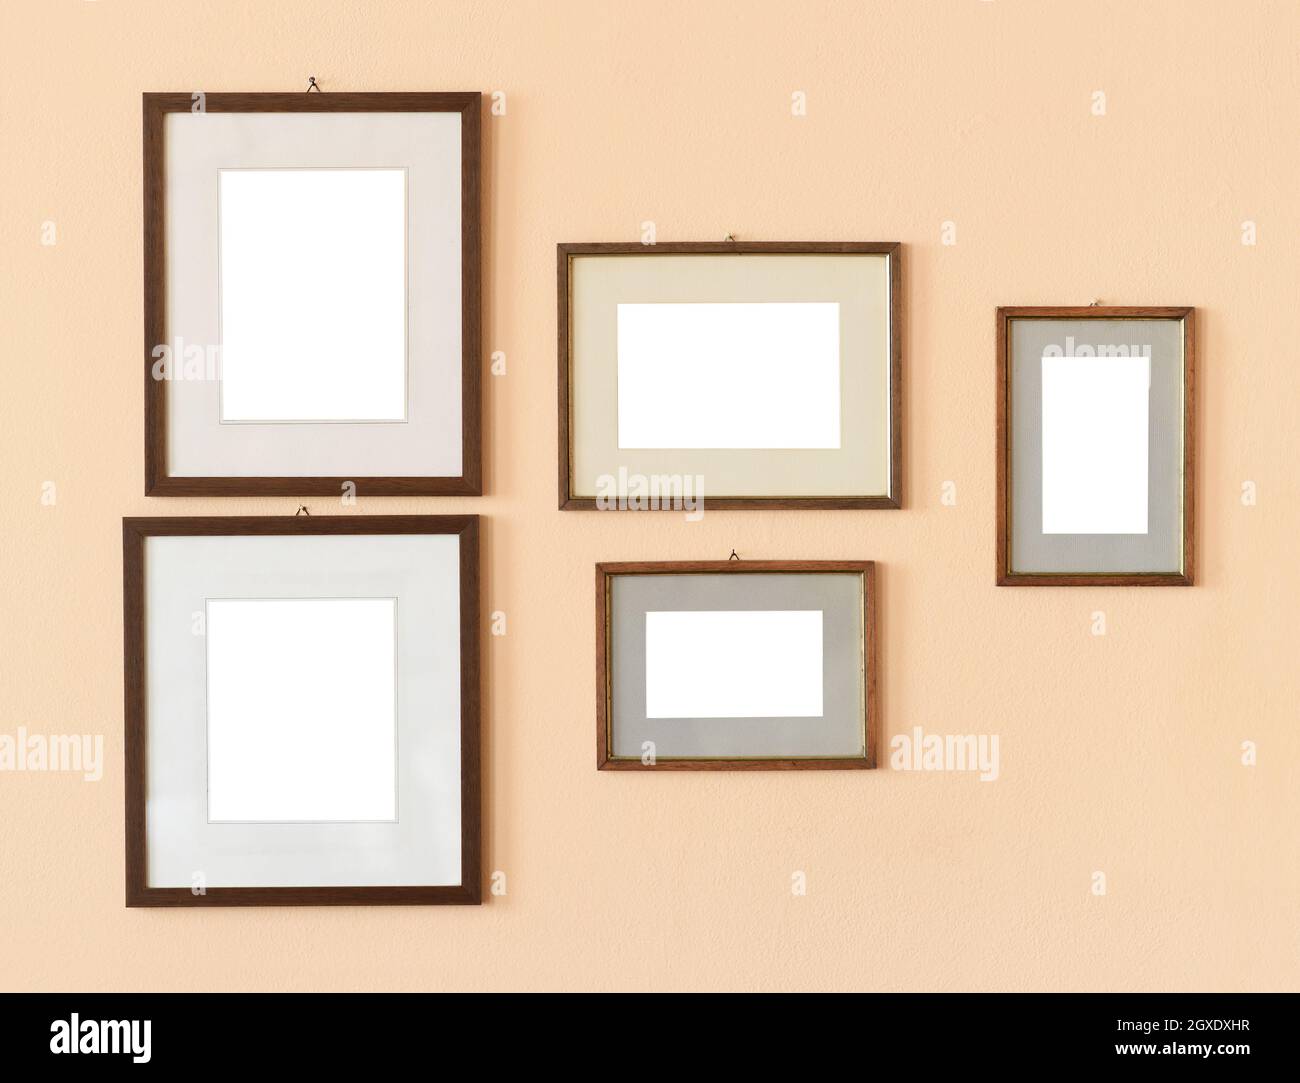 Set di varie cornici rettangolari mockup vuote di diverse dimensioni appese su pareti beige Foto Stock